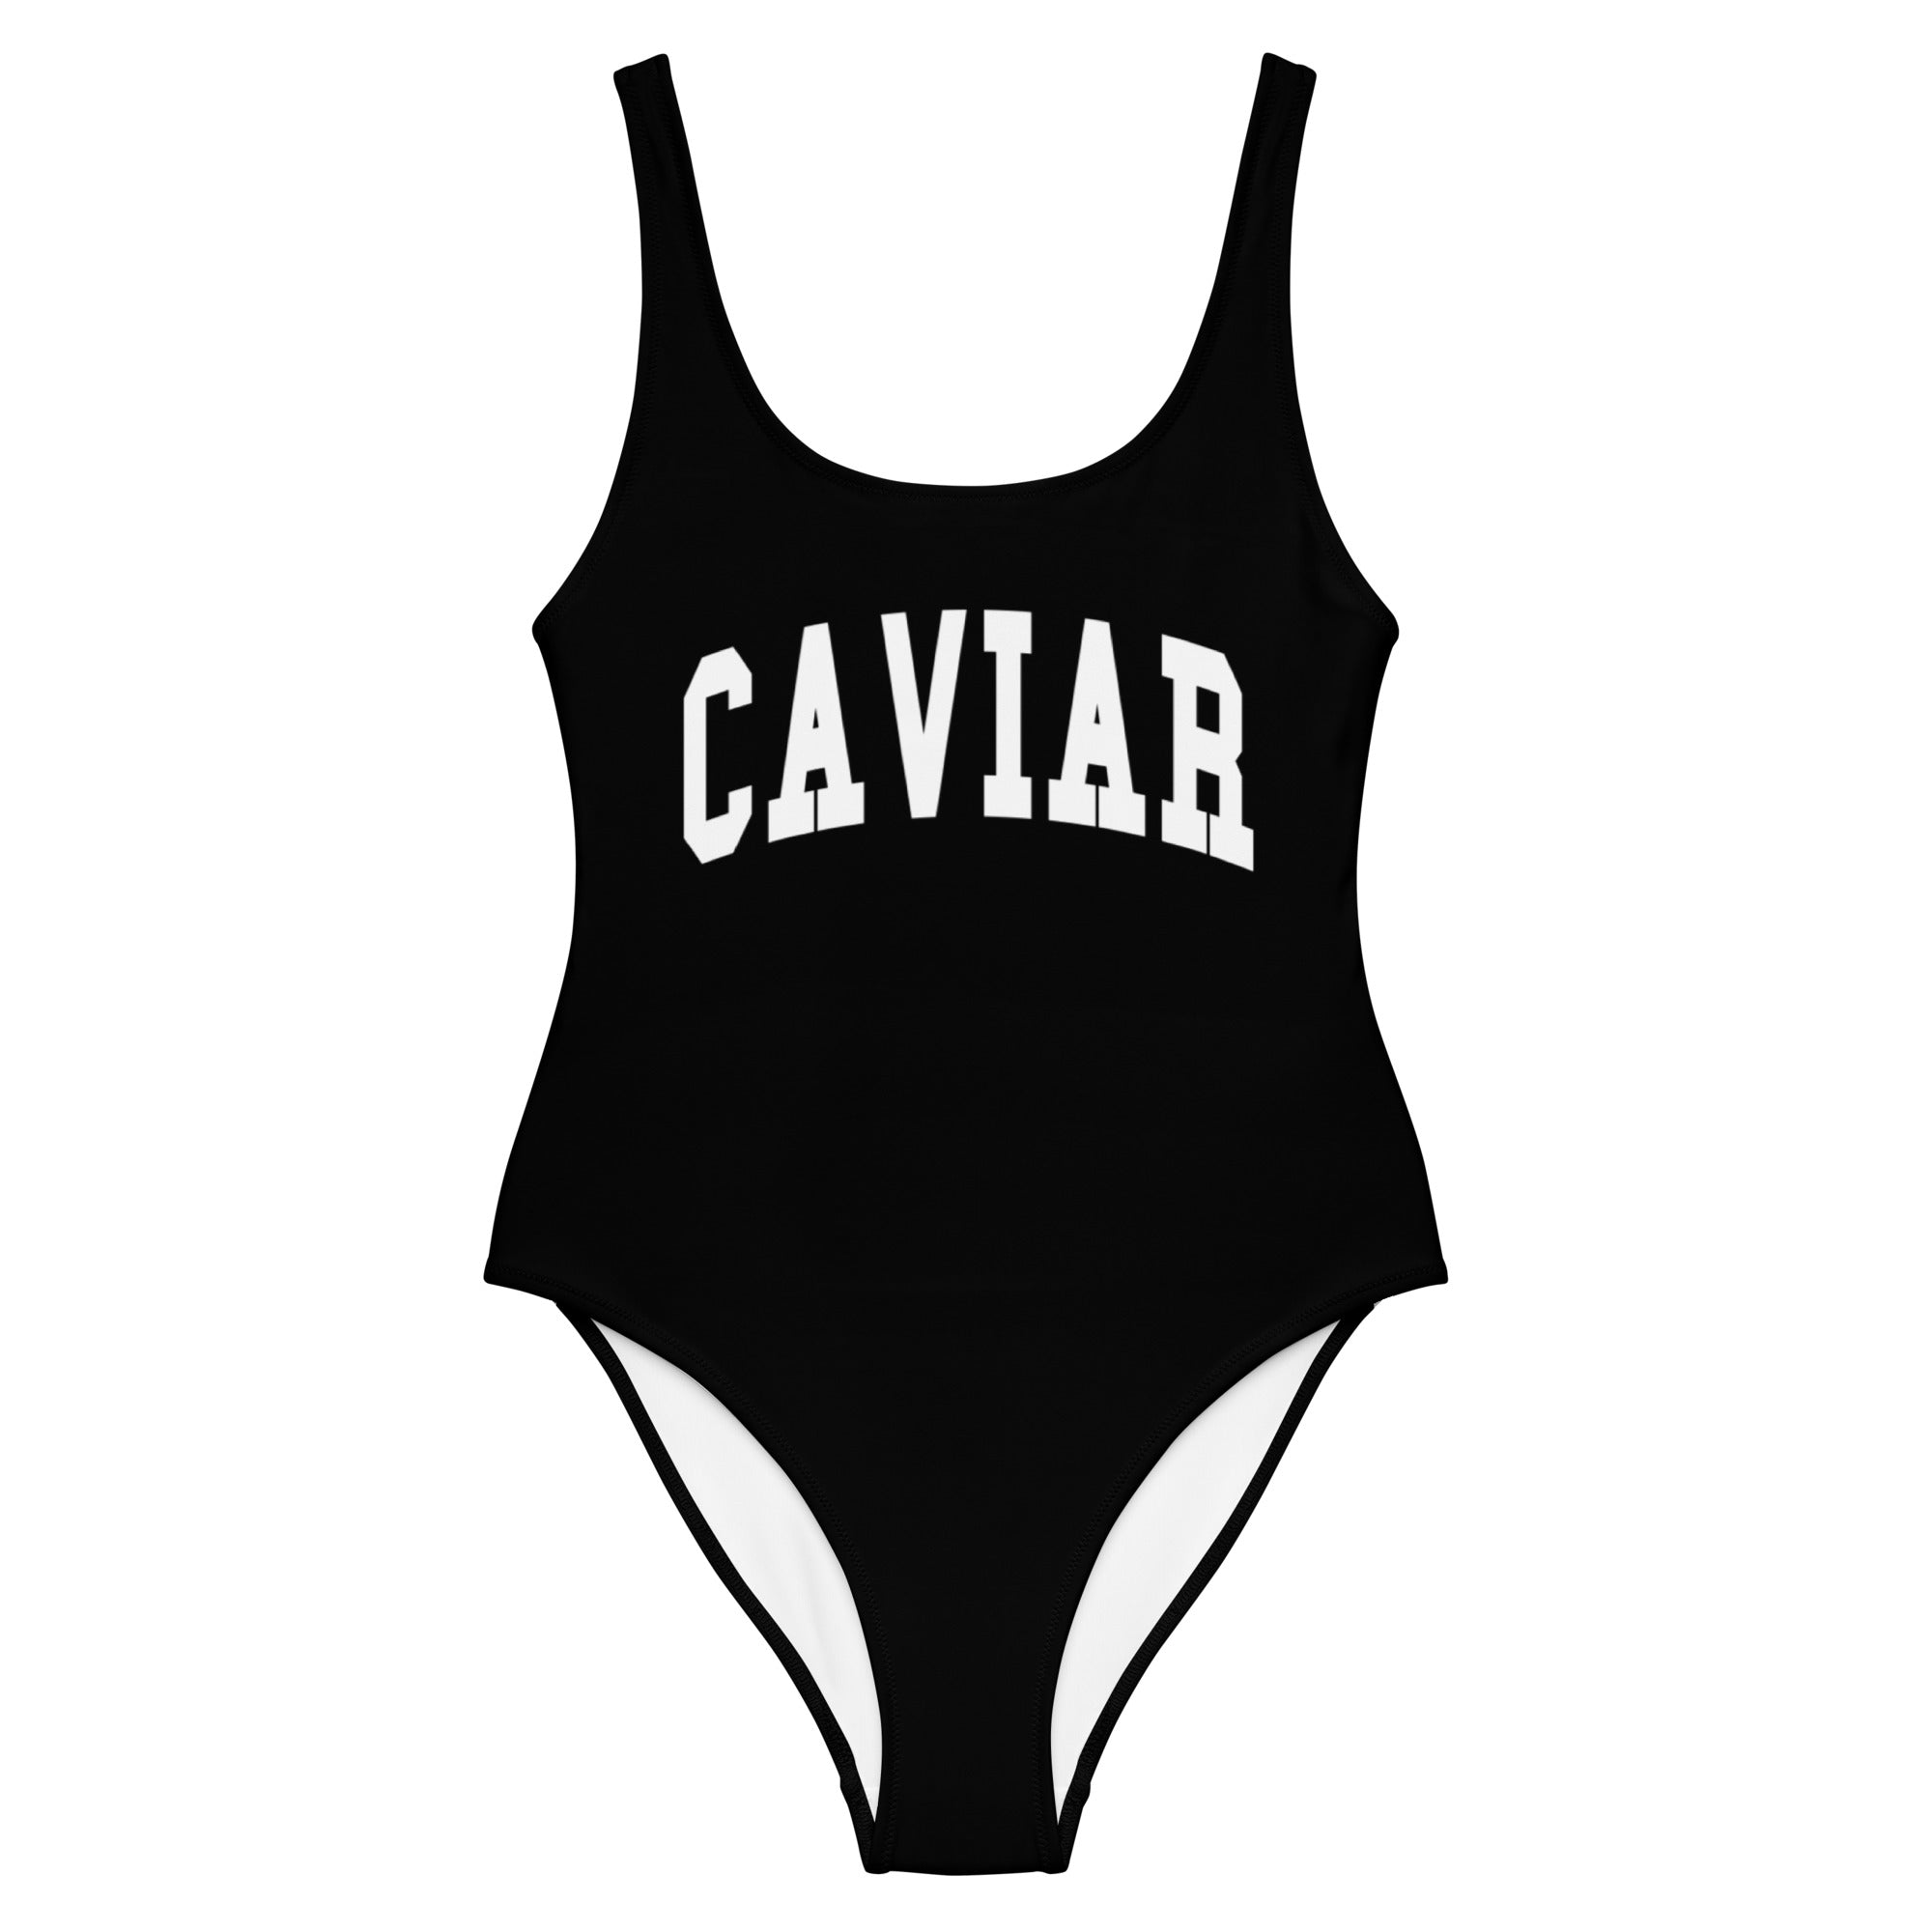 Caviar - Swimsuit - The Refined Spirit